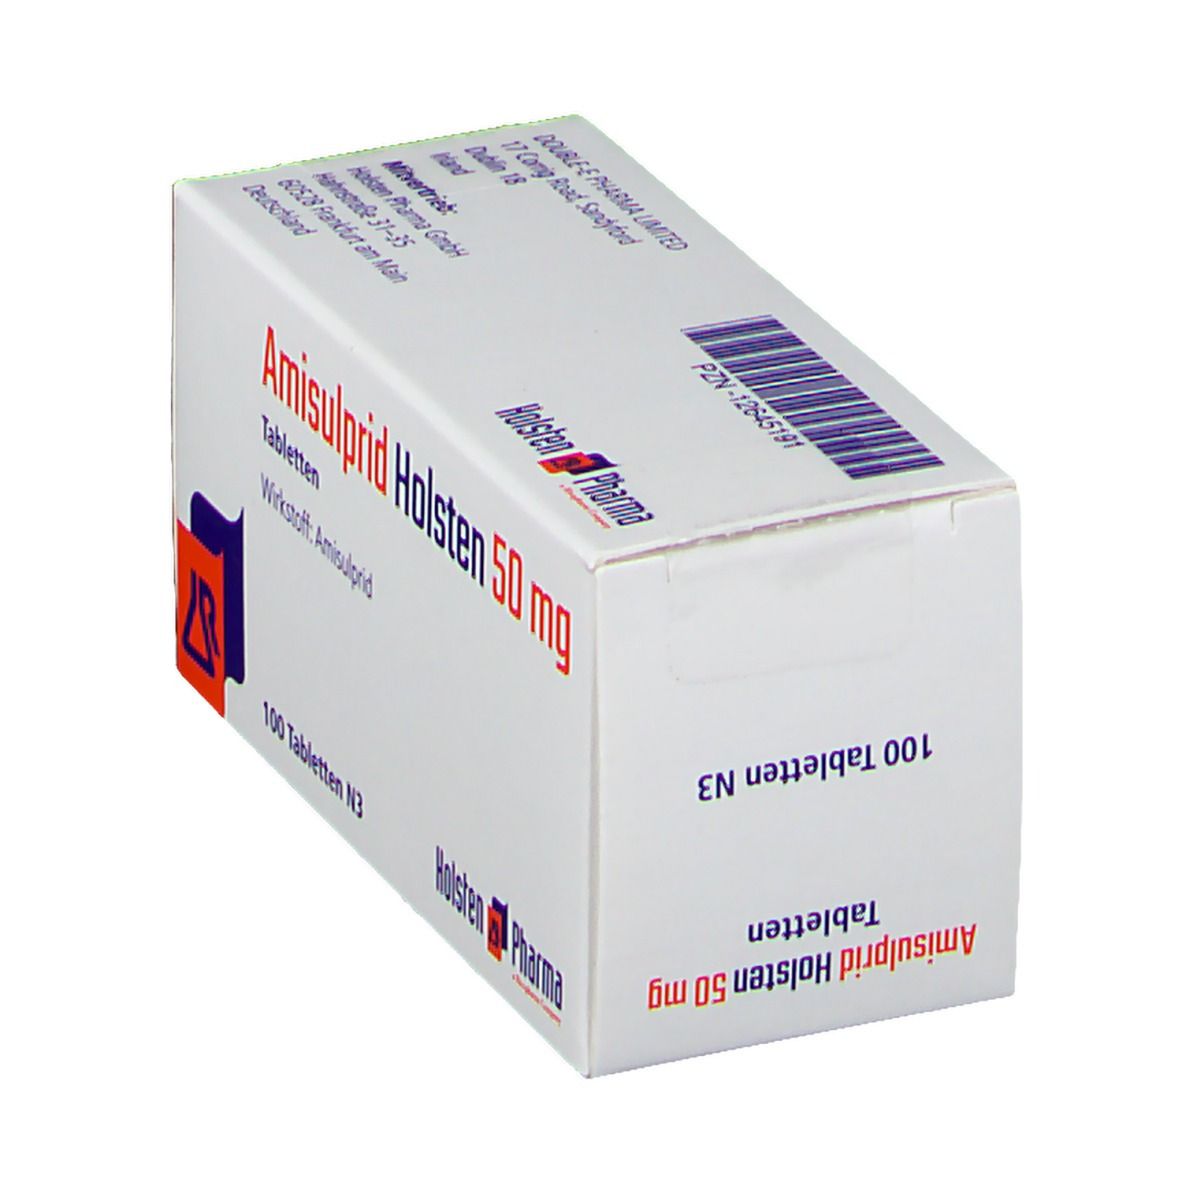 Amisulprid Holsten 50 mg